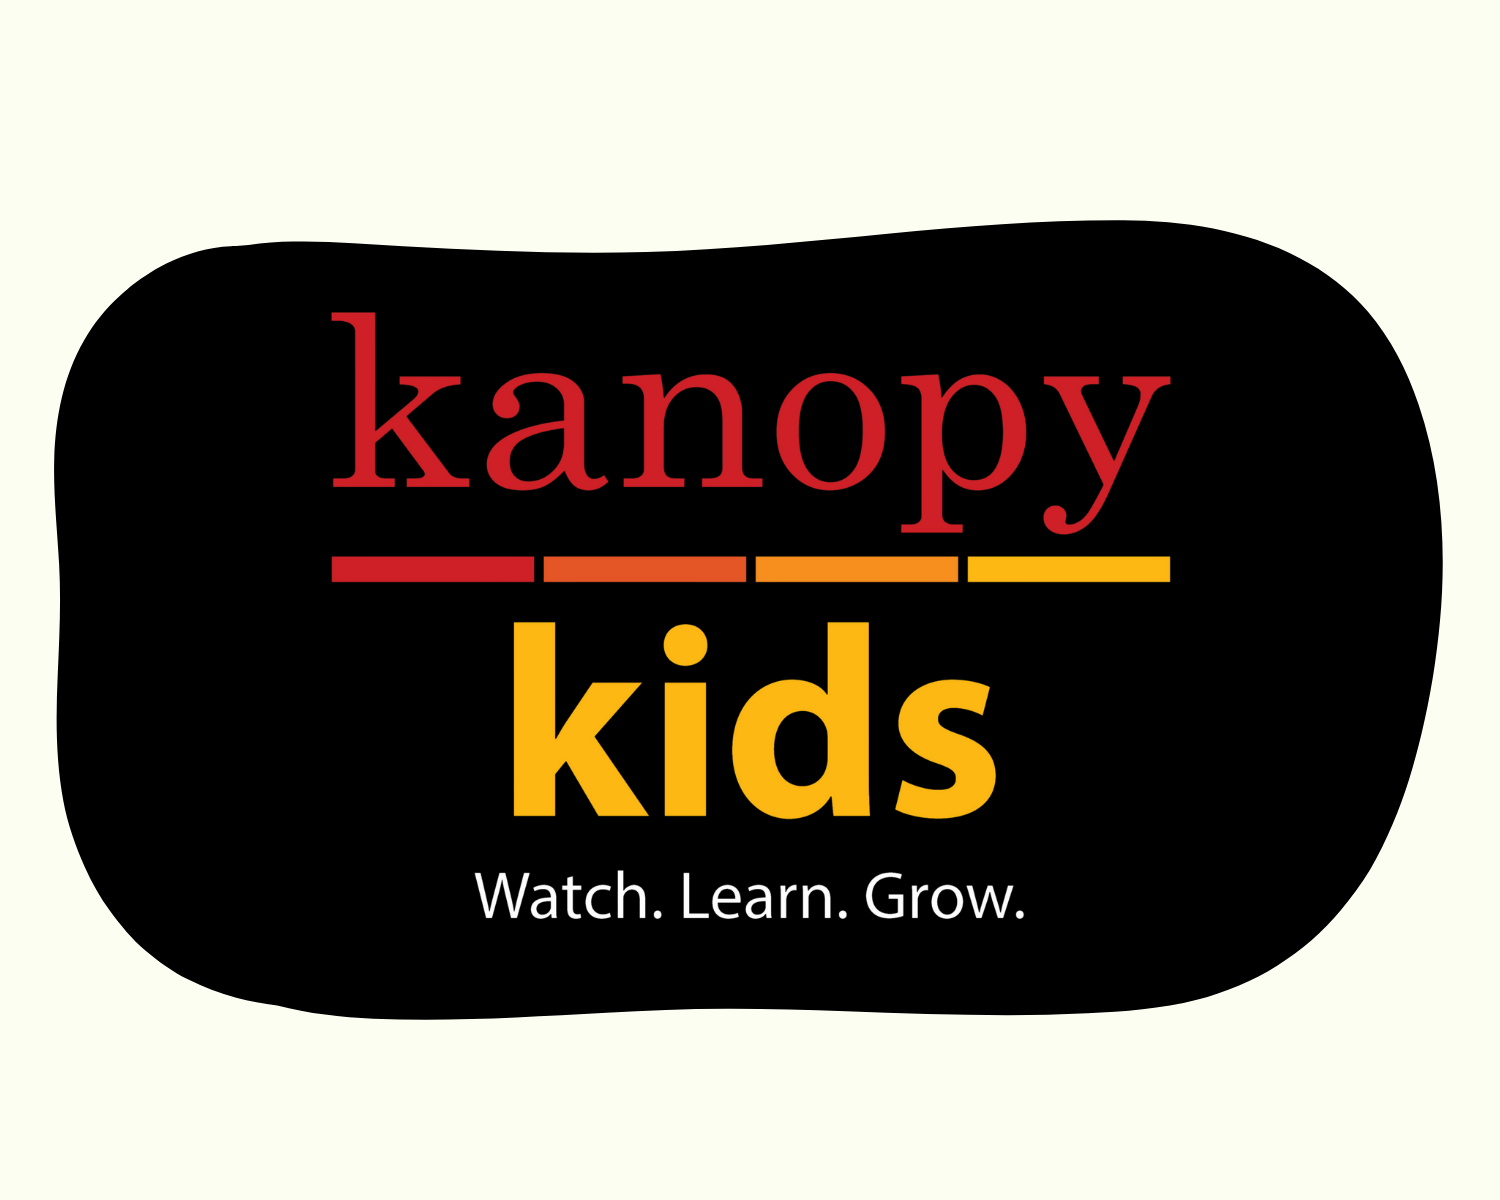 Kanopy Kids: Watch. Learn. Grow.